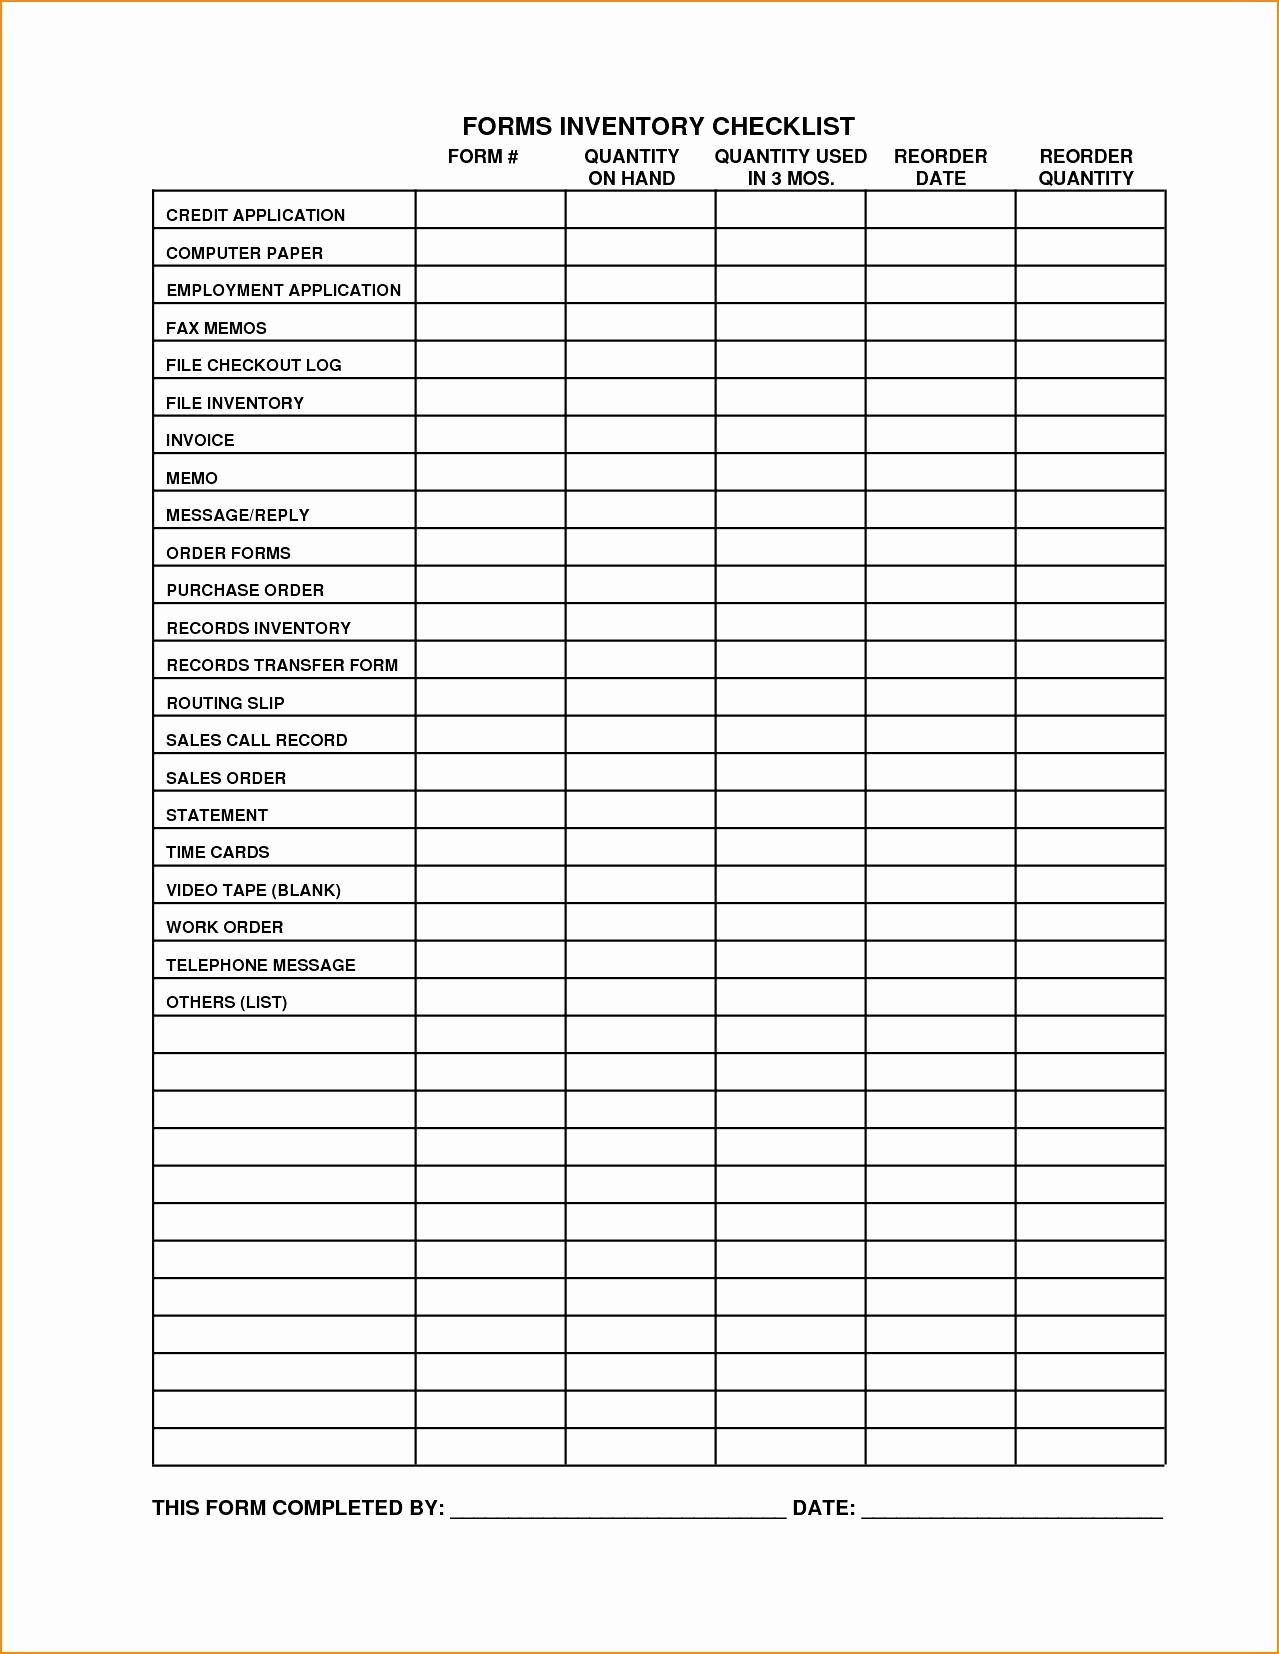 50 Unique Lularoe Spreadsheet DOCUMENTS IDEAS Document